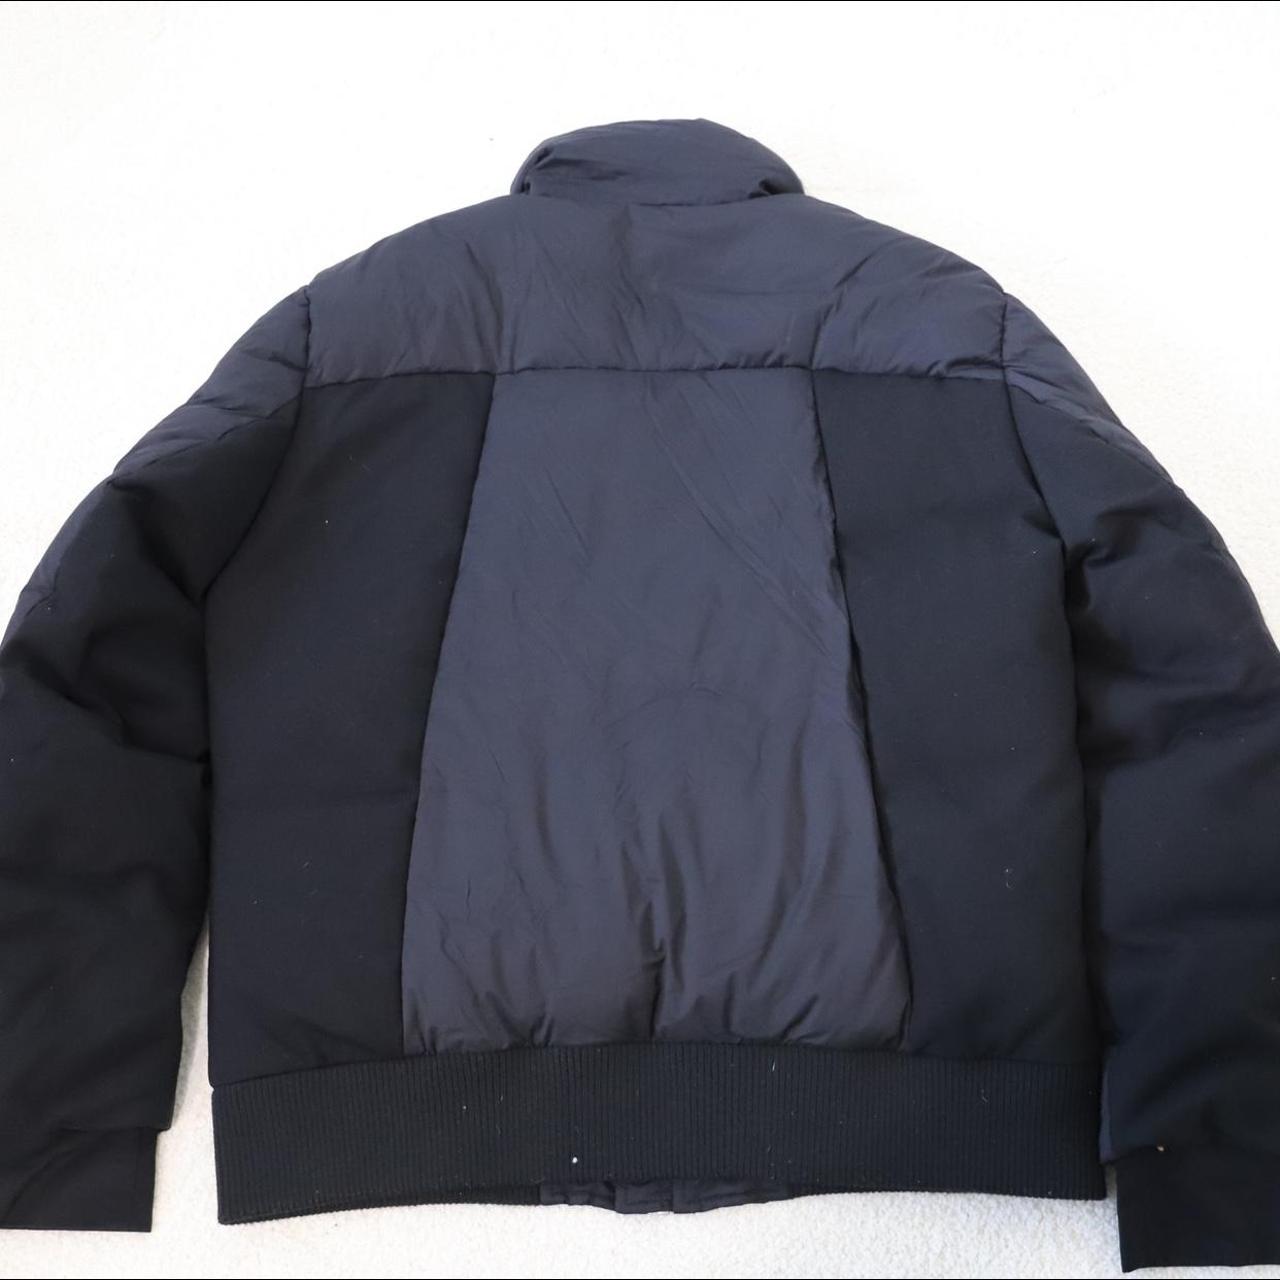 Oversized Black Puffer Jacket with zip-up pockets... - Depop